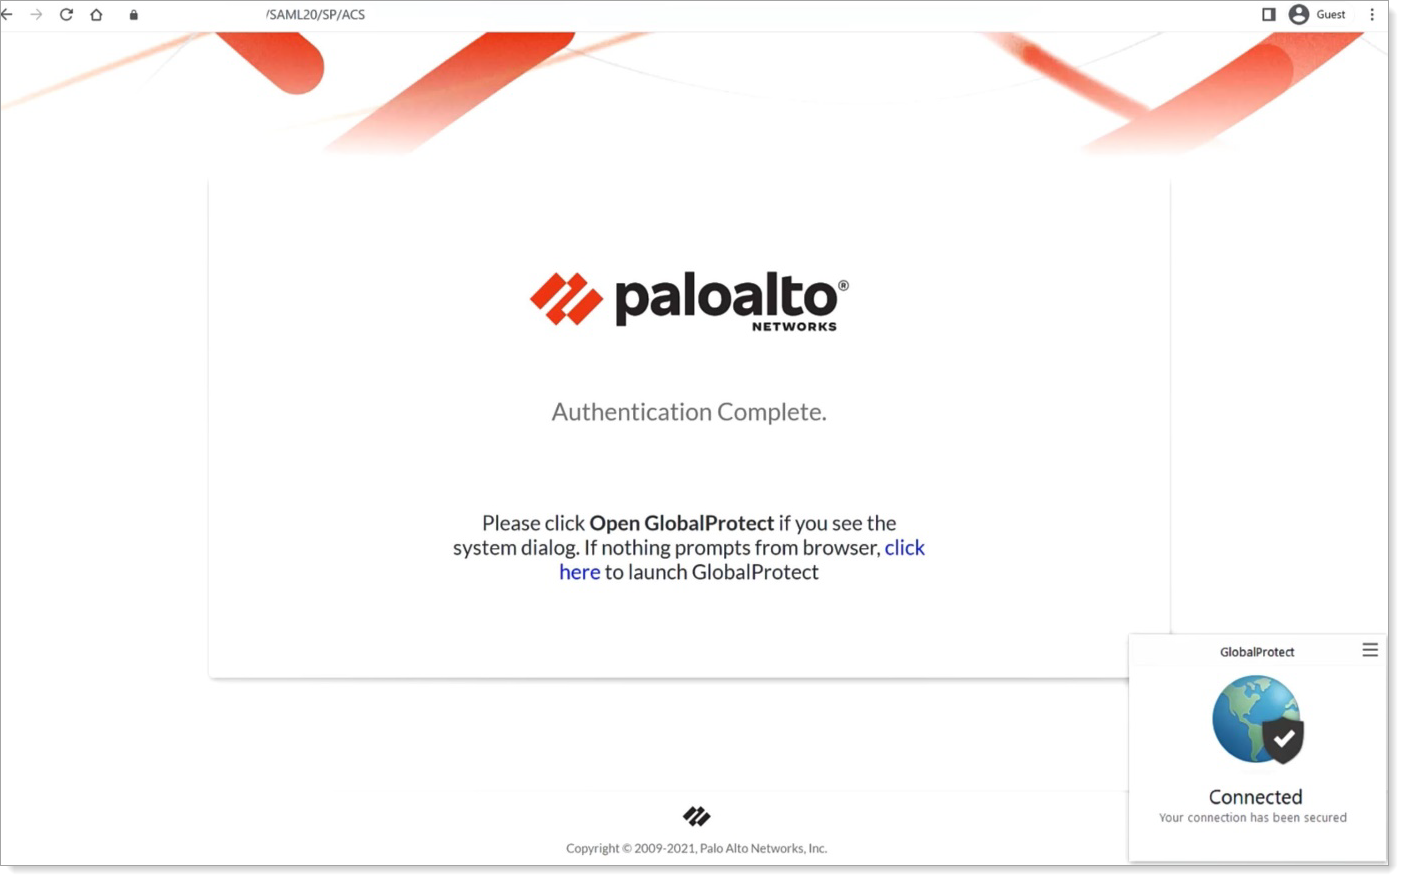 palo-alto_saml_settings_arculix_016.png